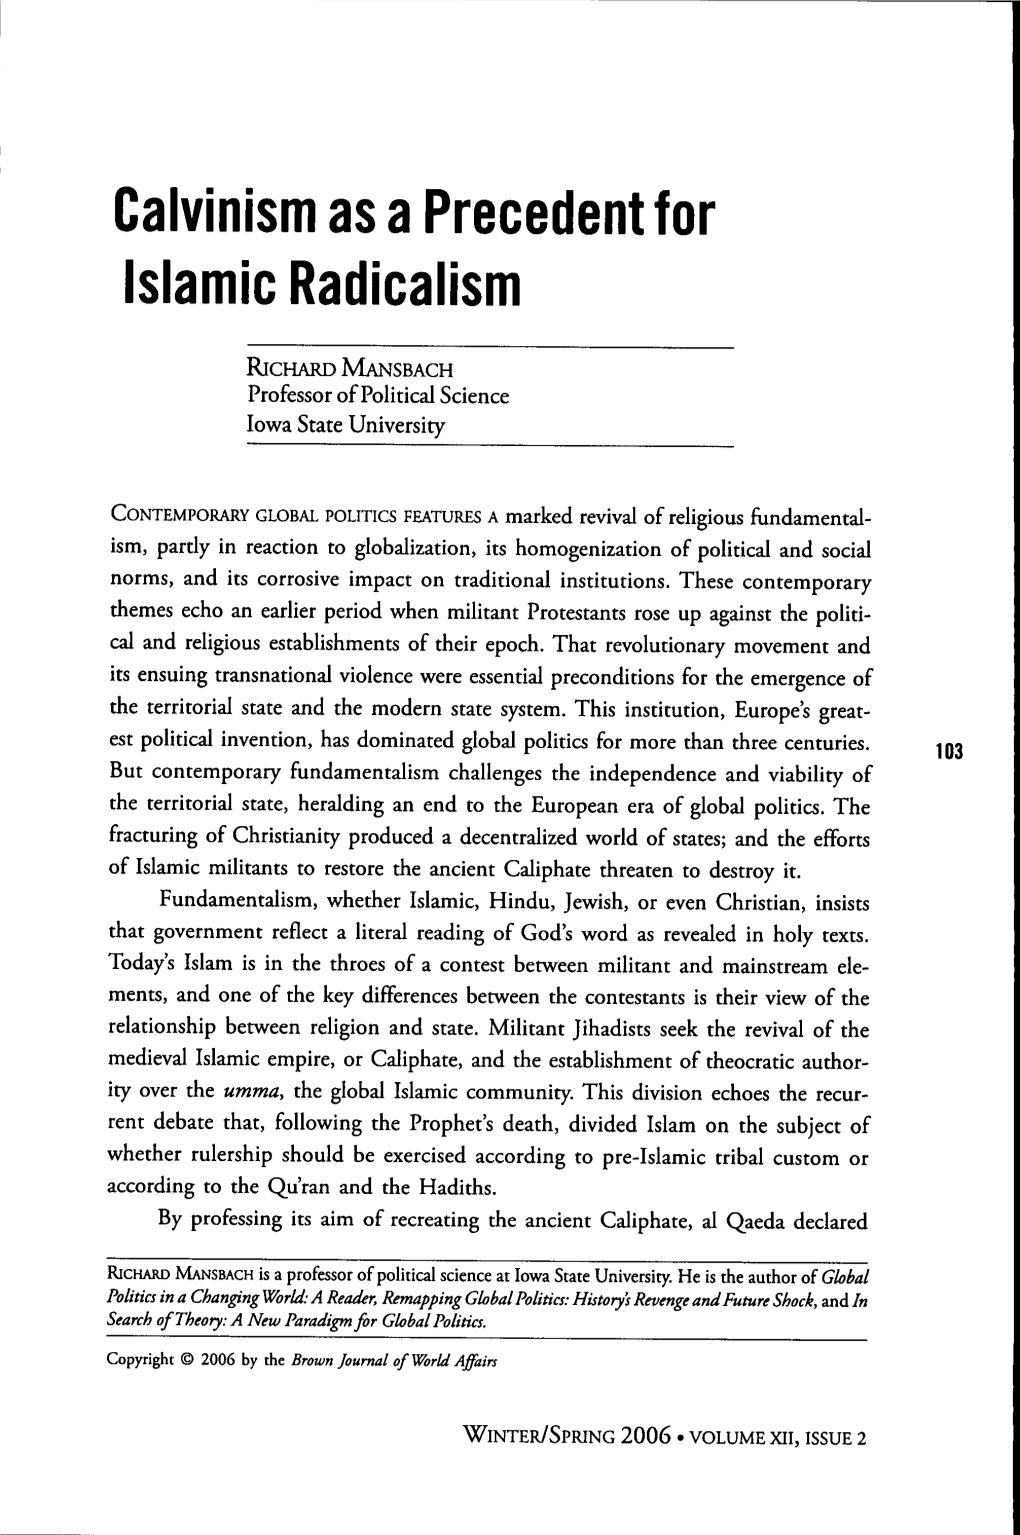 Calvinism As a Precedent for Islamic Radicalism